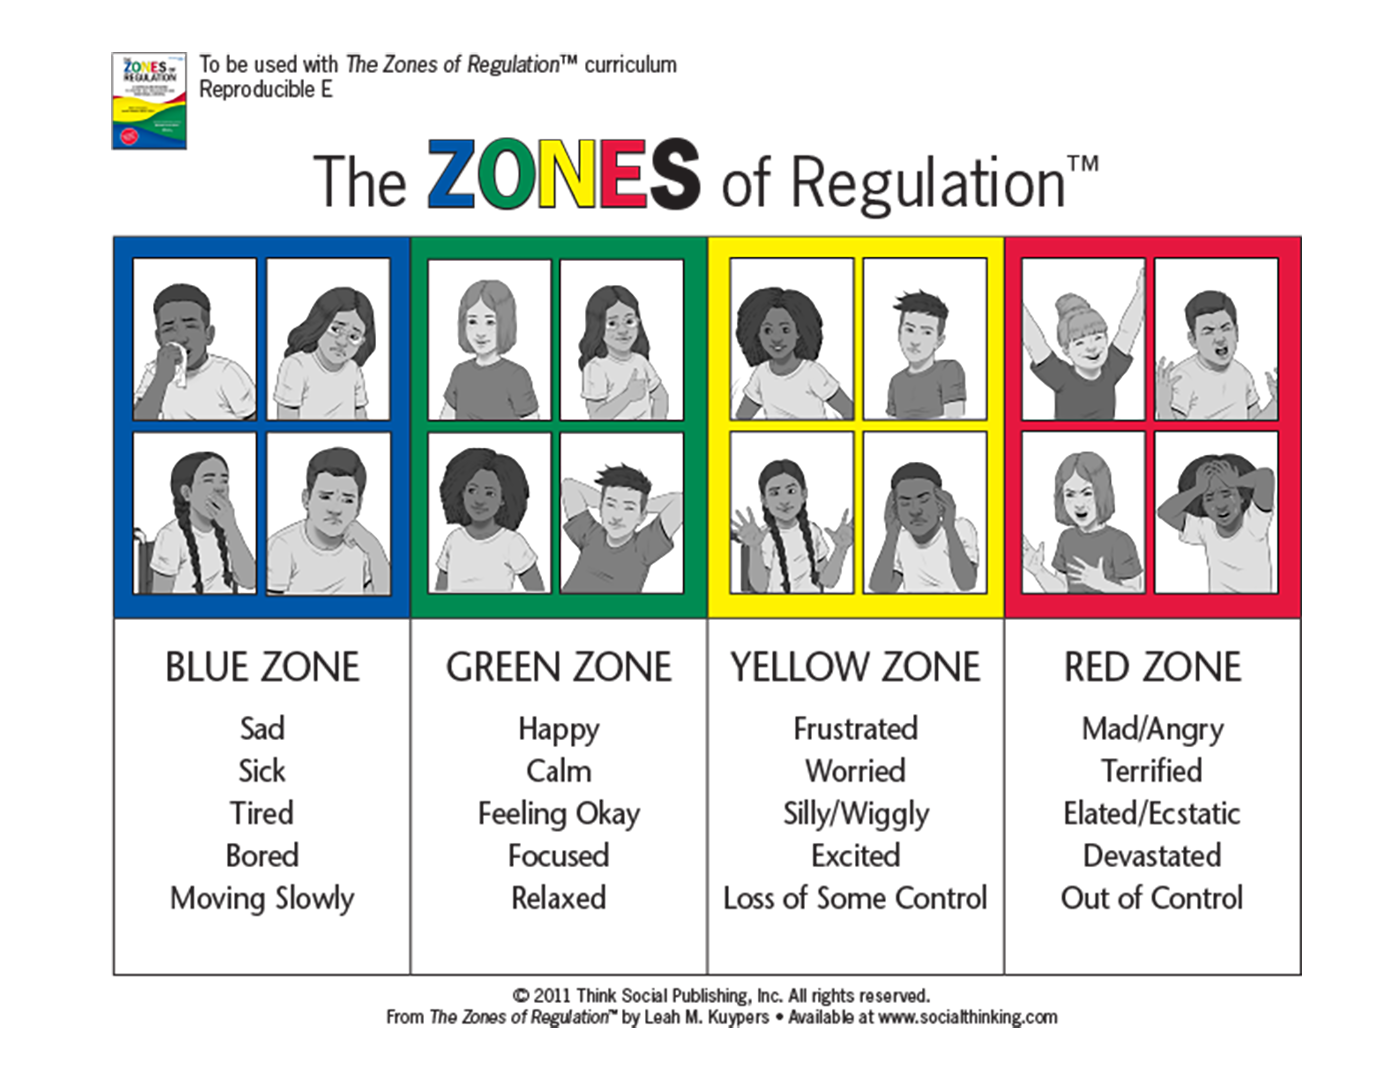 zones-of-regulation-free-printables-portal-tutorials-sexiezpicz-web-porn